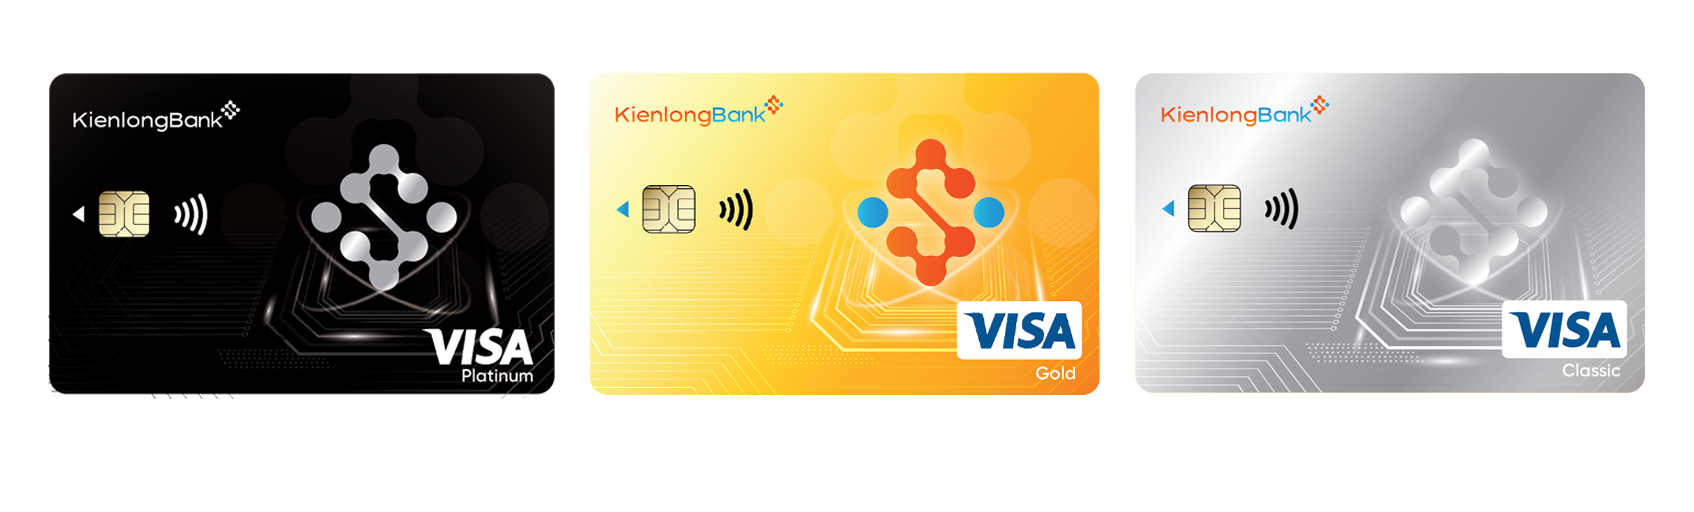 Kienlongbank Visa Contactless Credit Card